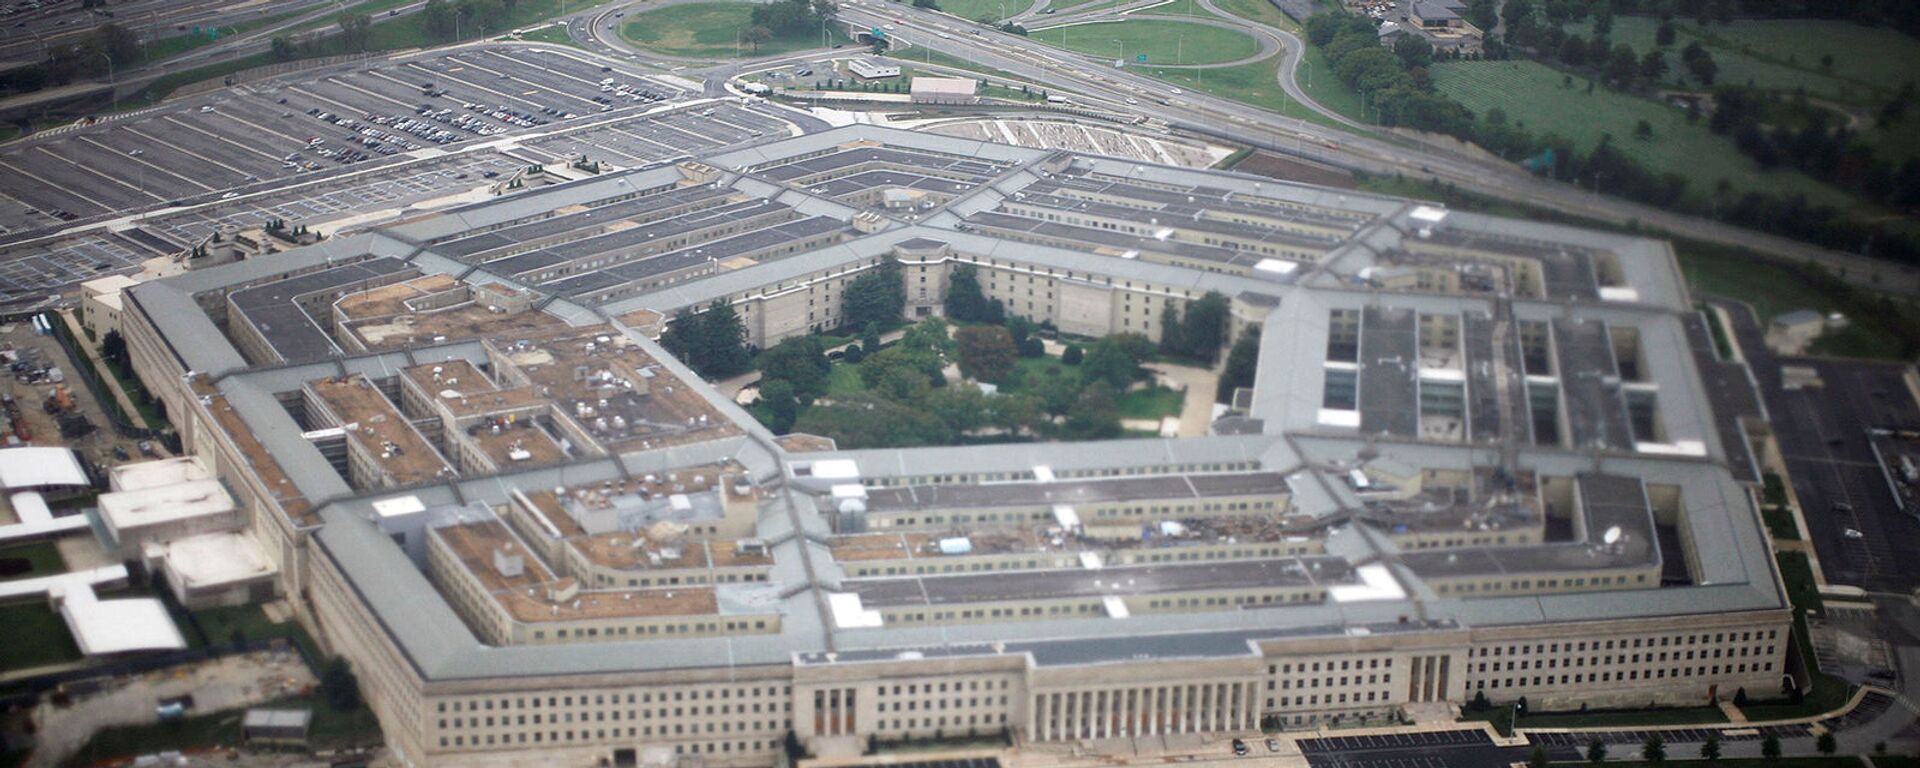 Вид с воздуха на здание Пентагона в США - Sputnik Армения, 1920, 22.10.2021